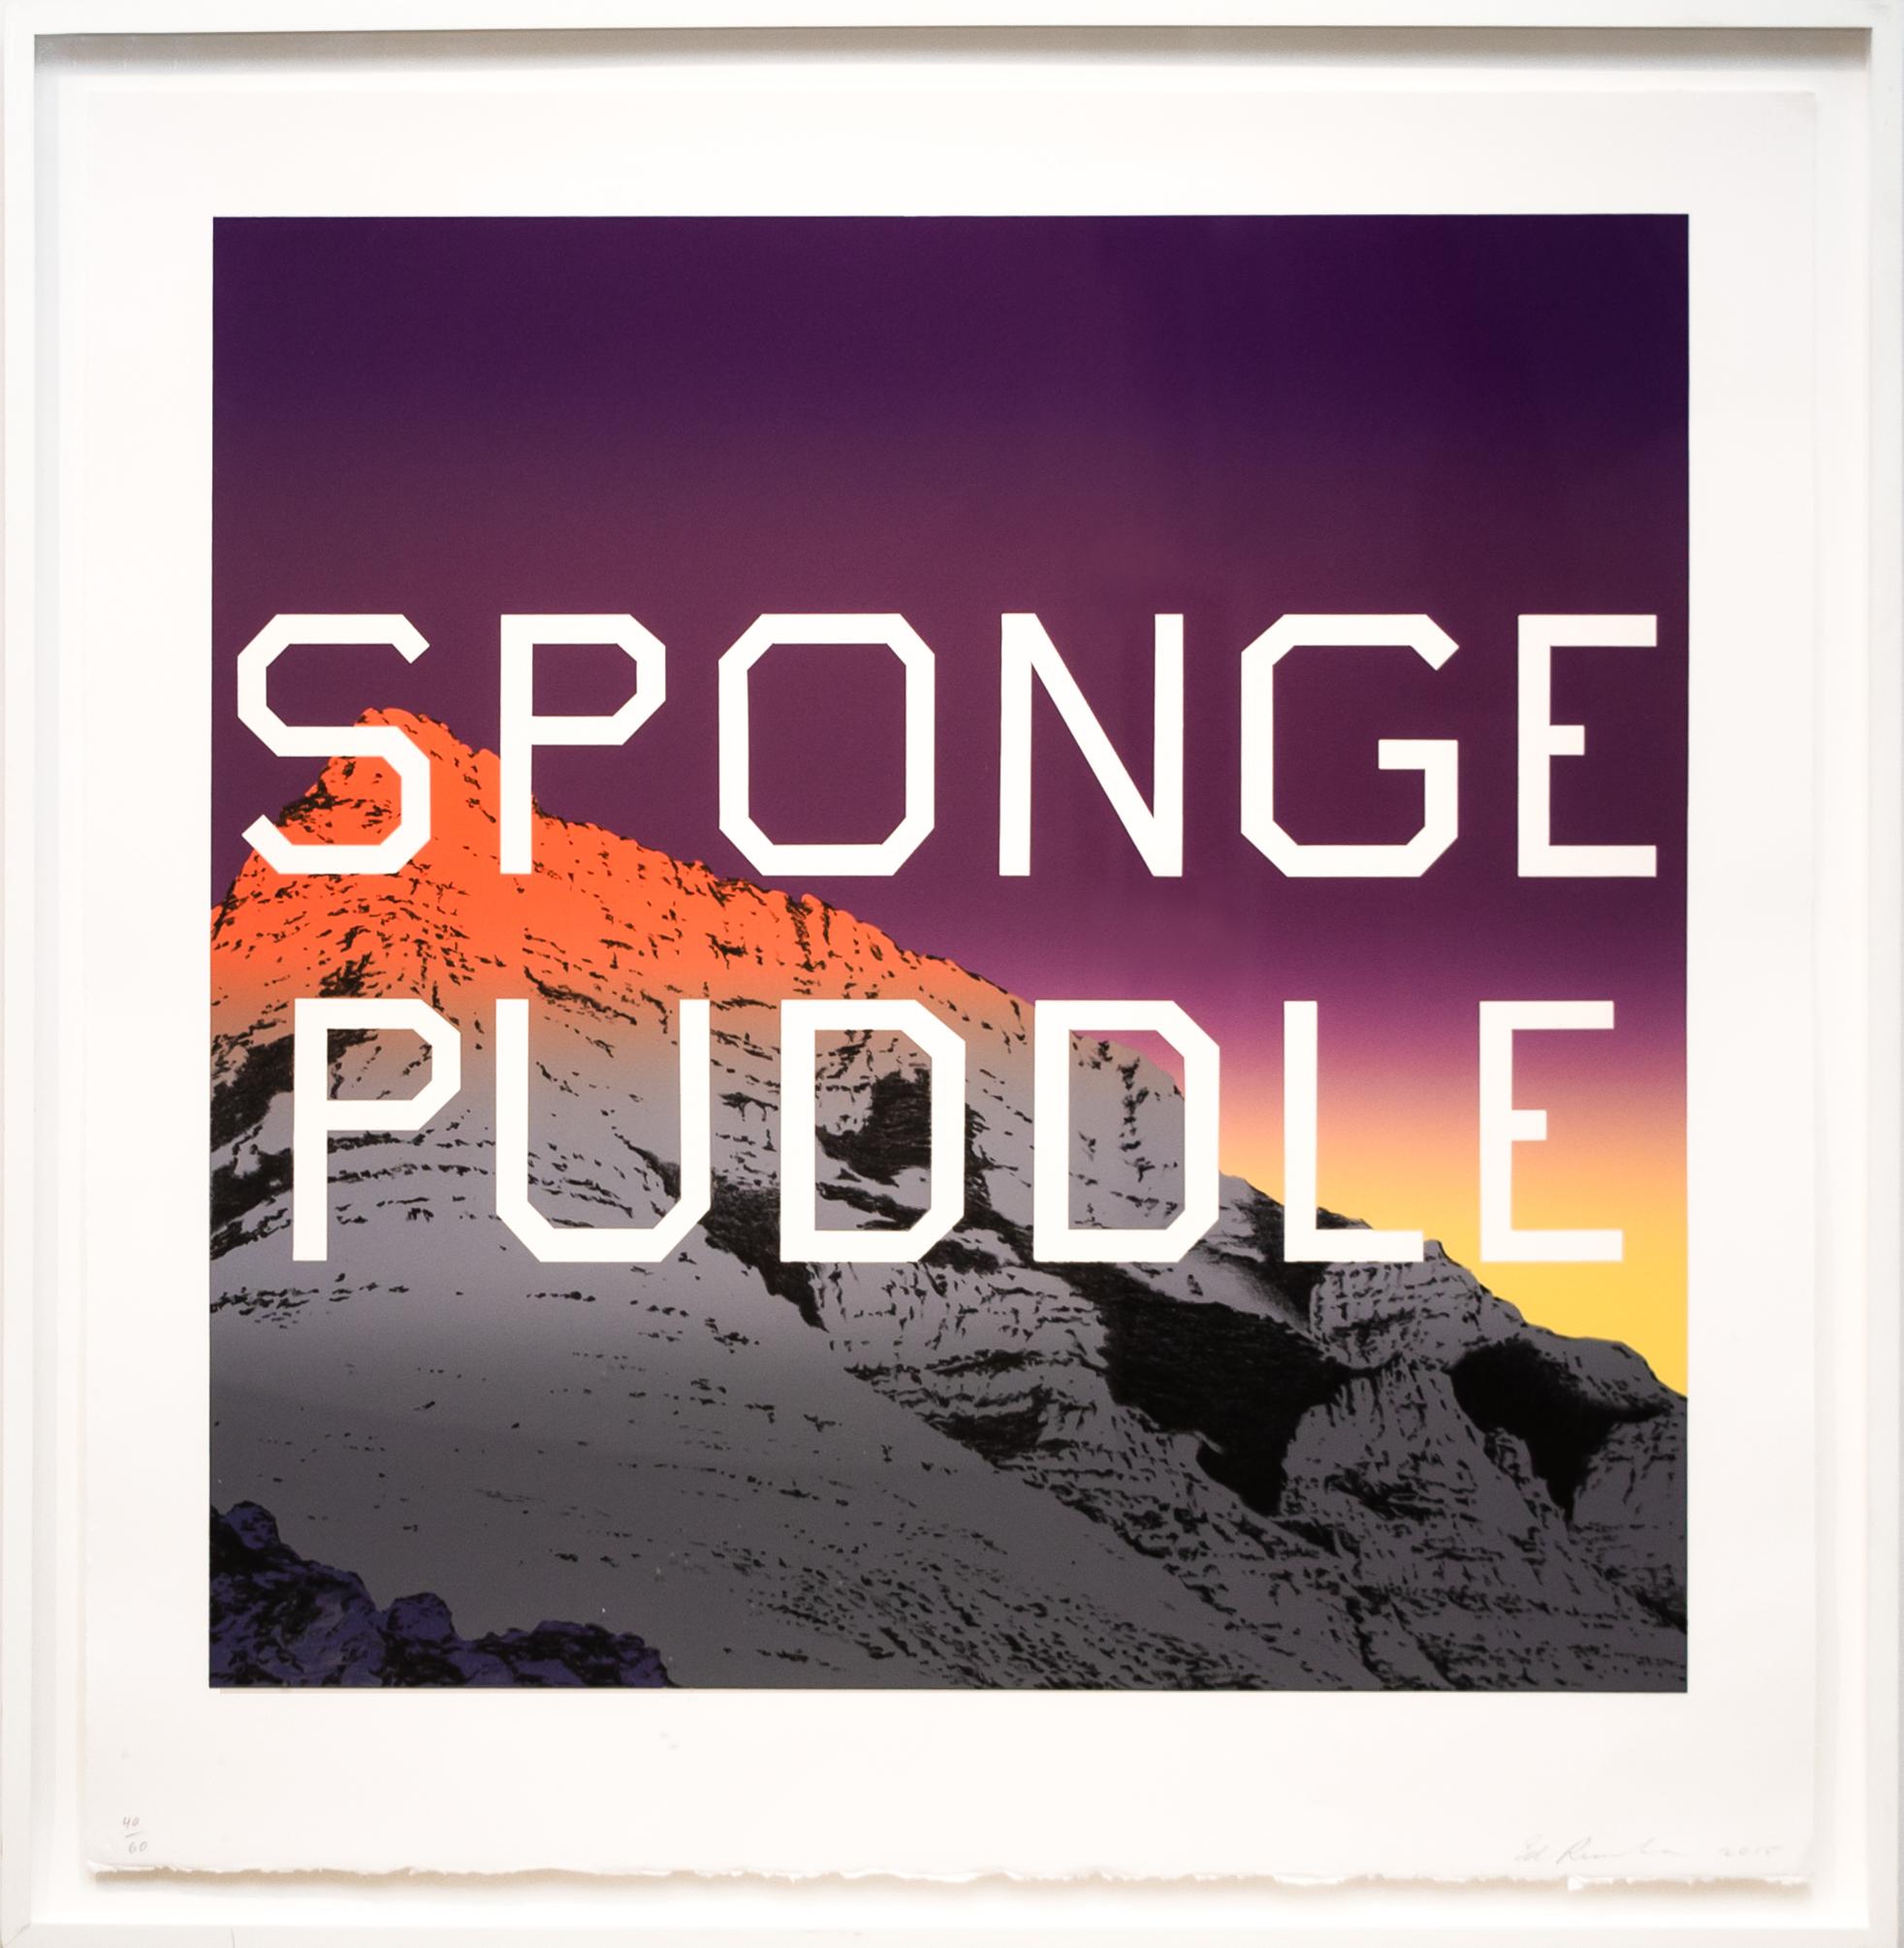 Ed Ruscha Abstract Print - Sponge Puddle